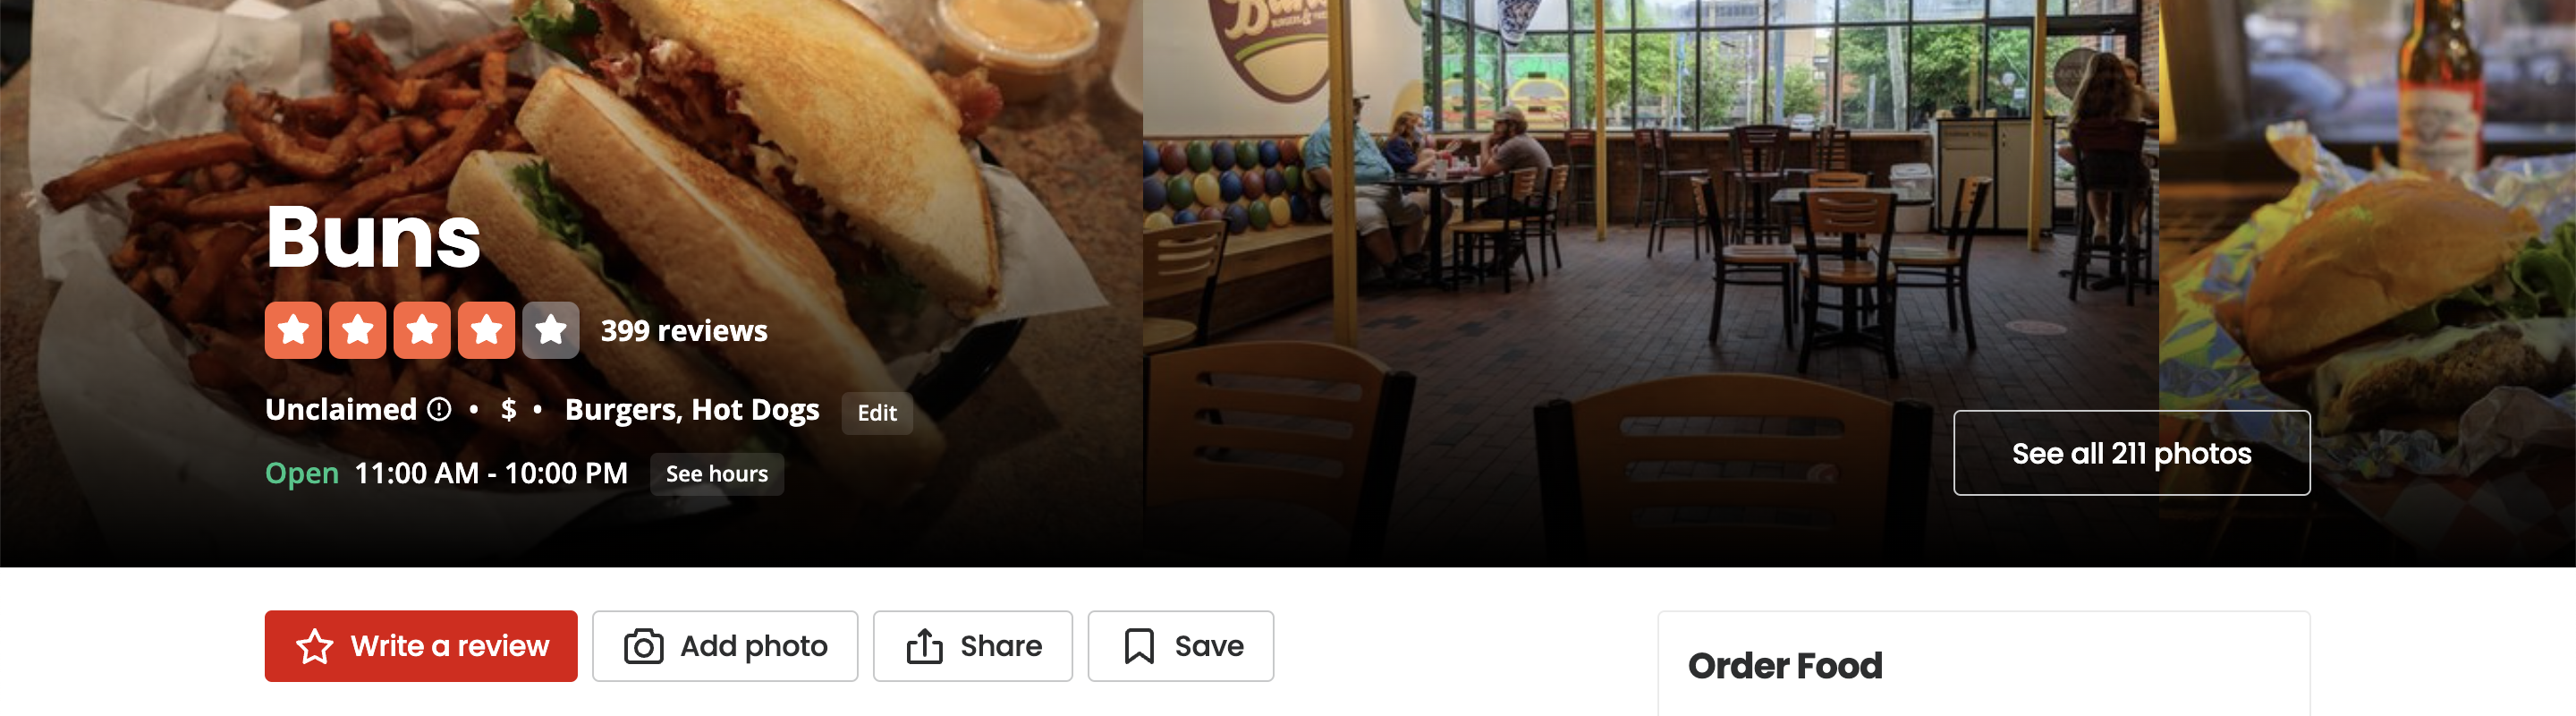 Yelp Restaurant Rating Screenshot